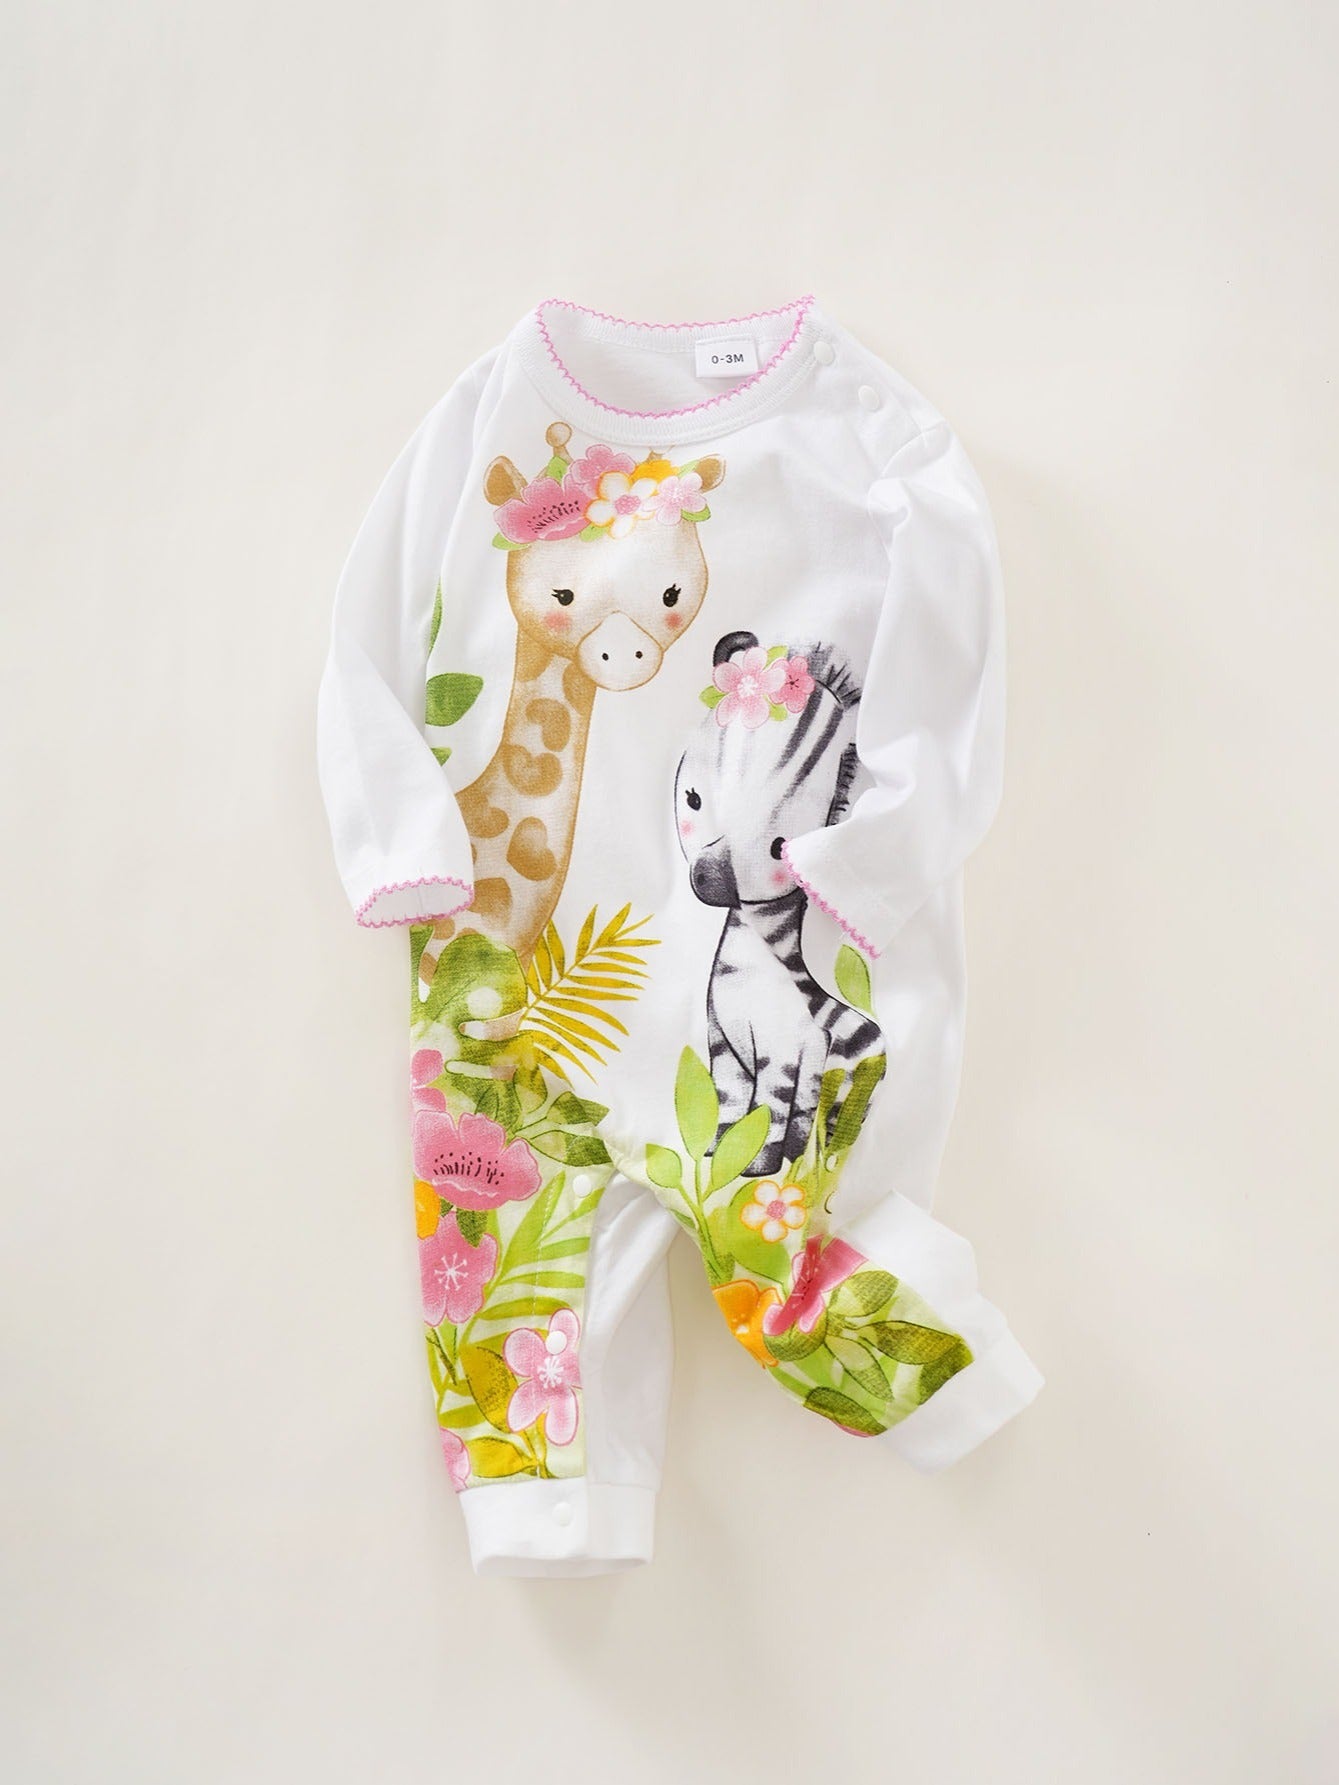 Toddler Newborn Baby Girls Romper Cartoon Giraffe Zebra Printed Jumpsuit